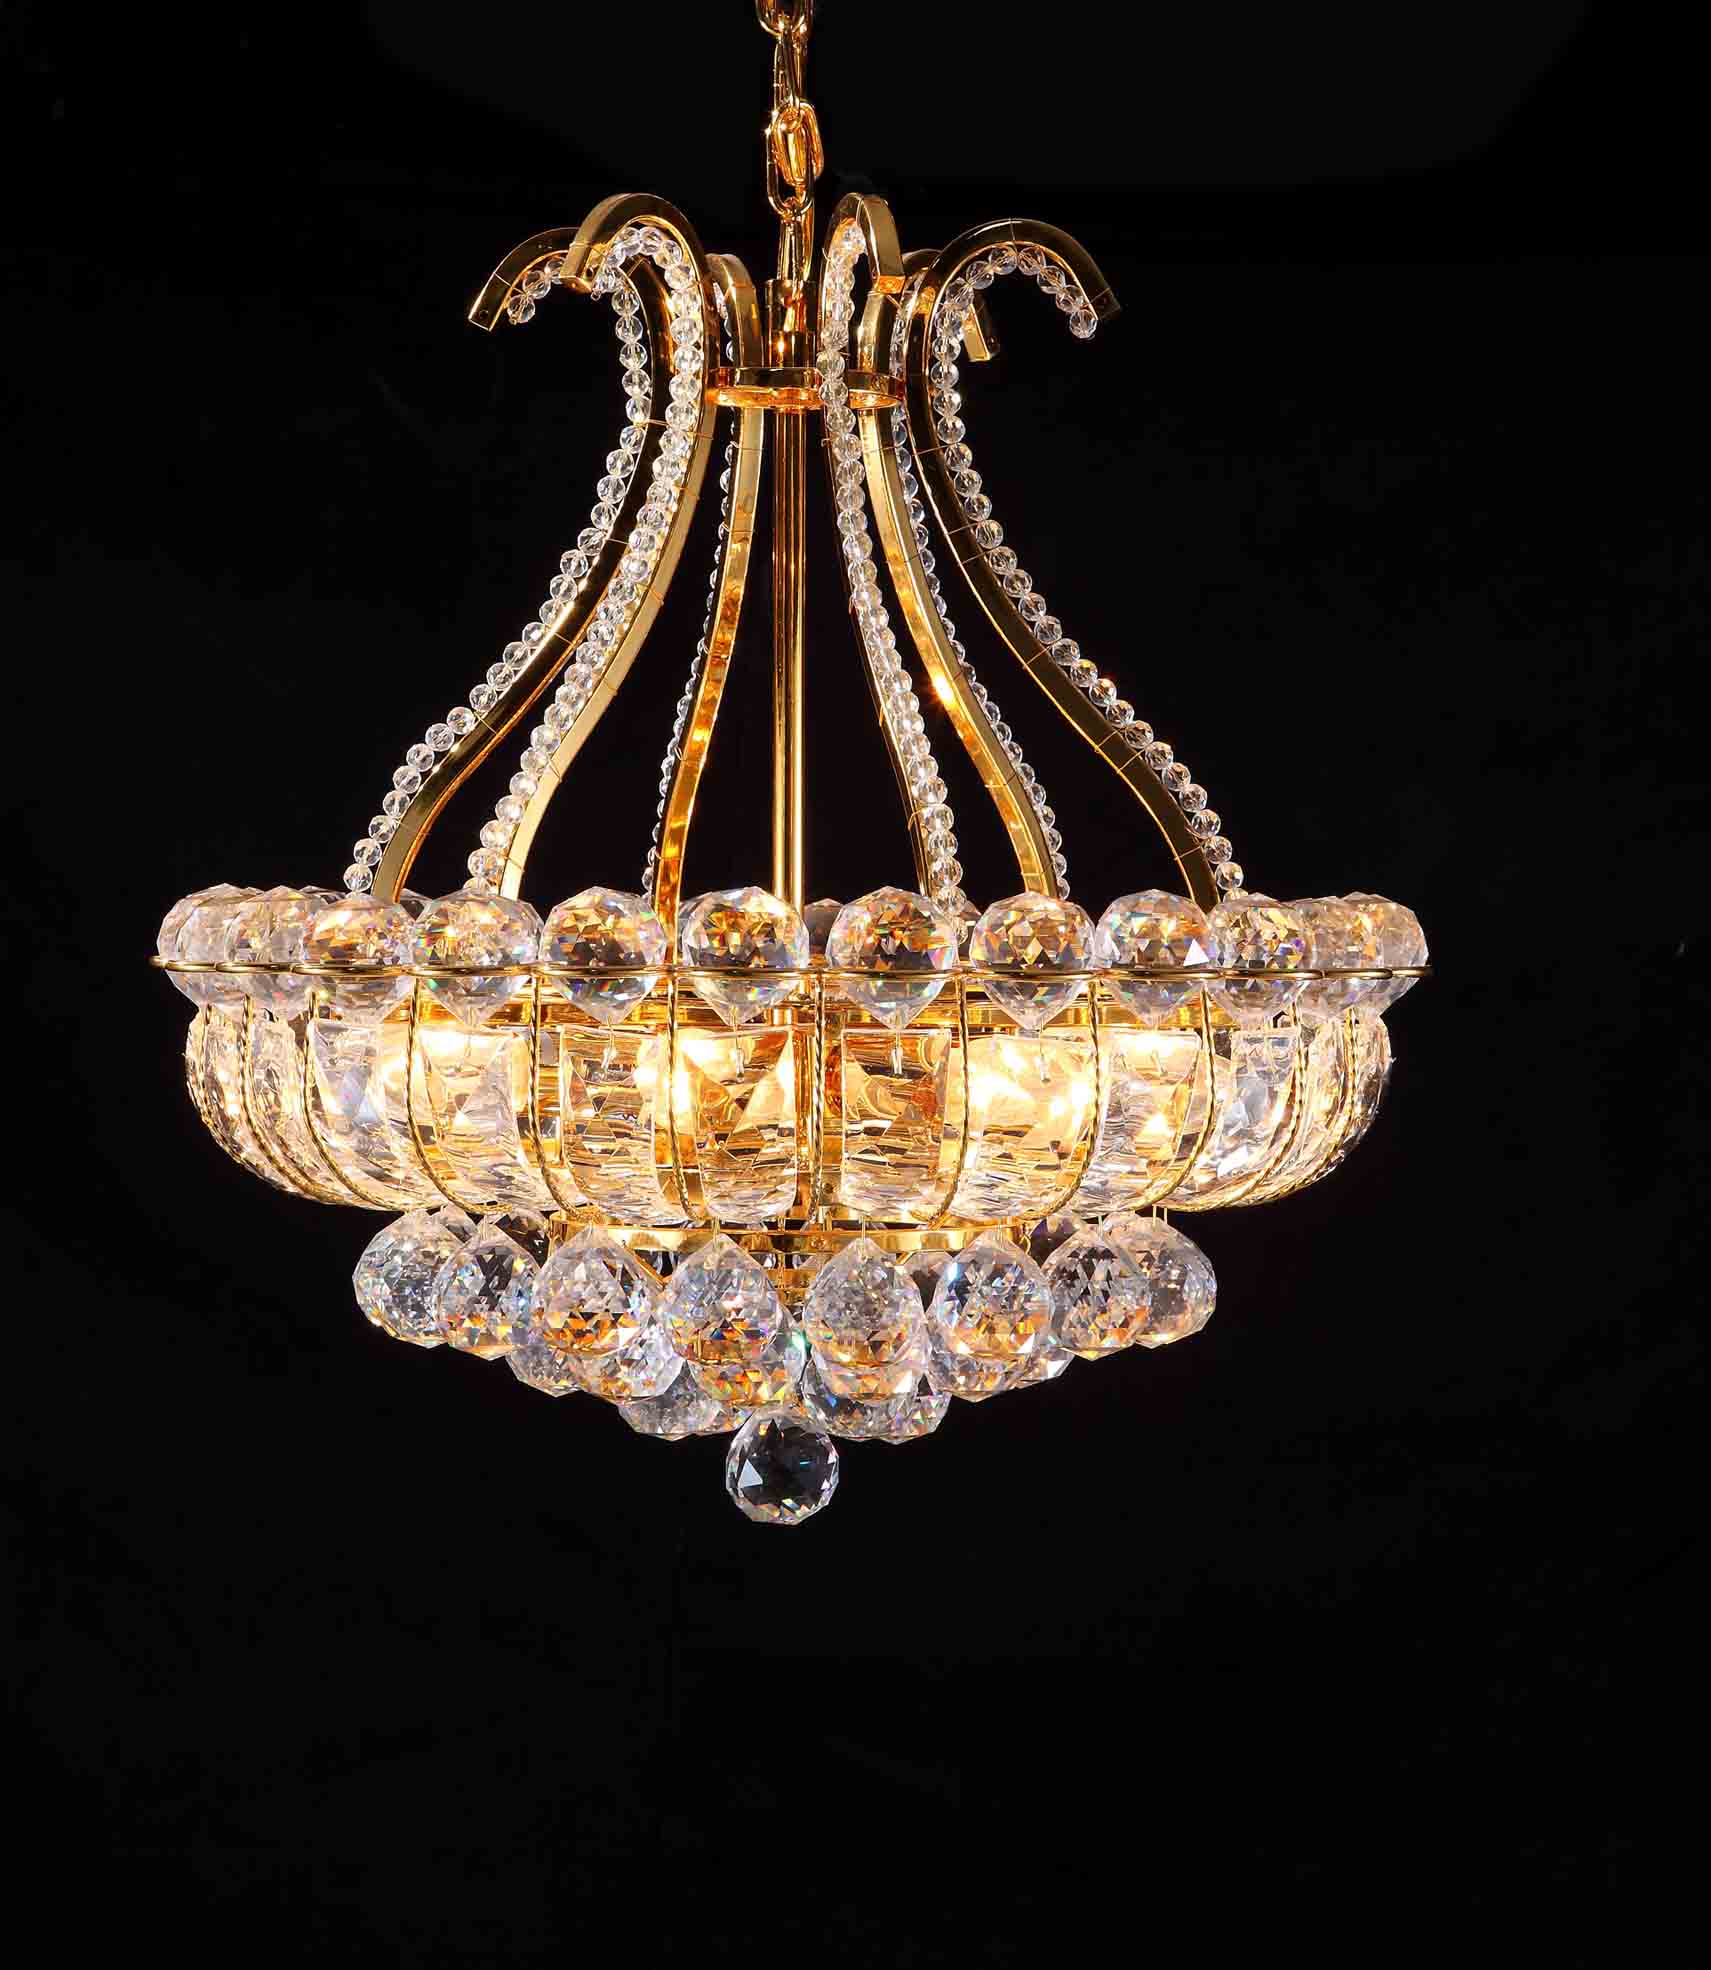 6312-D450xH460 L8 Crystal chandelier